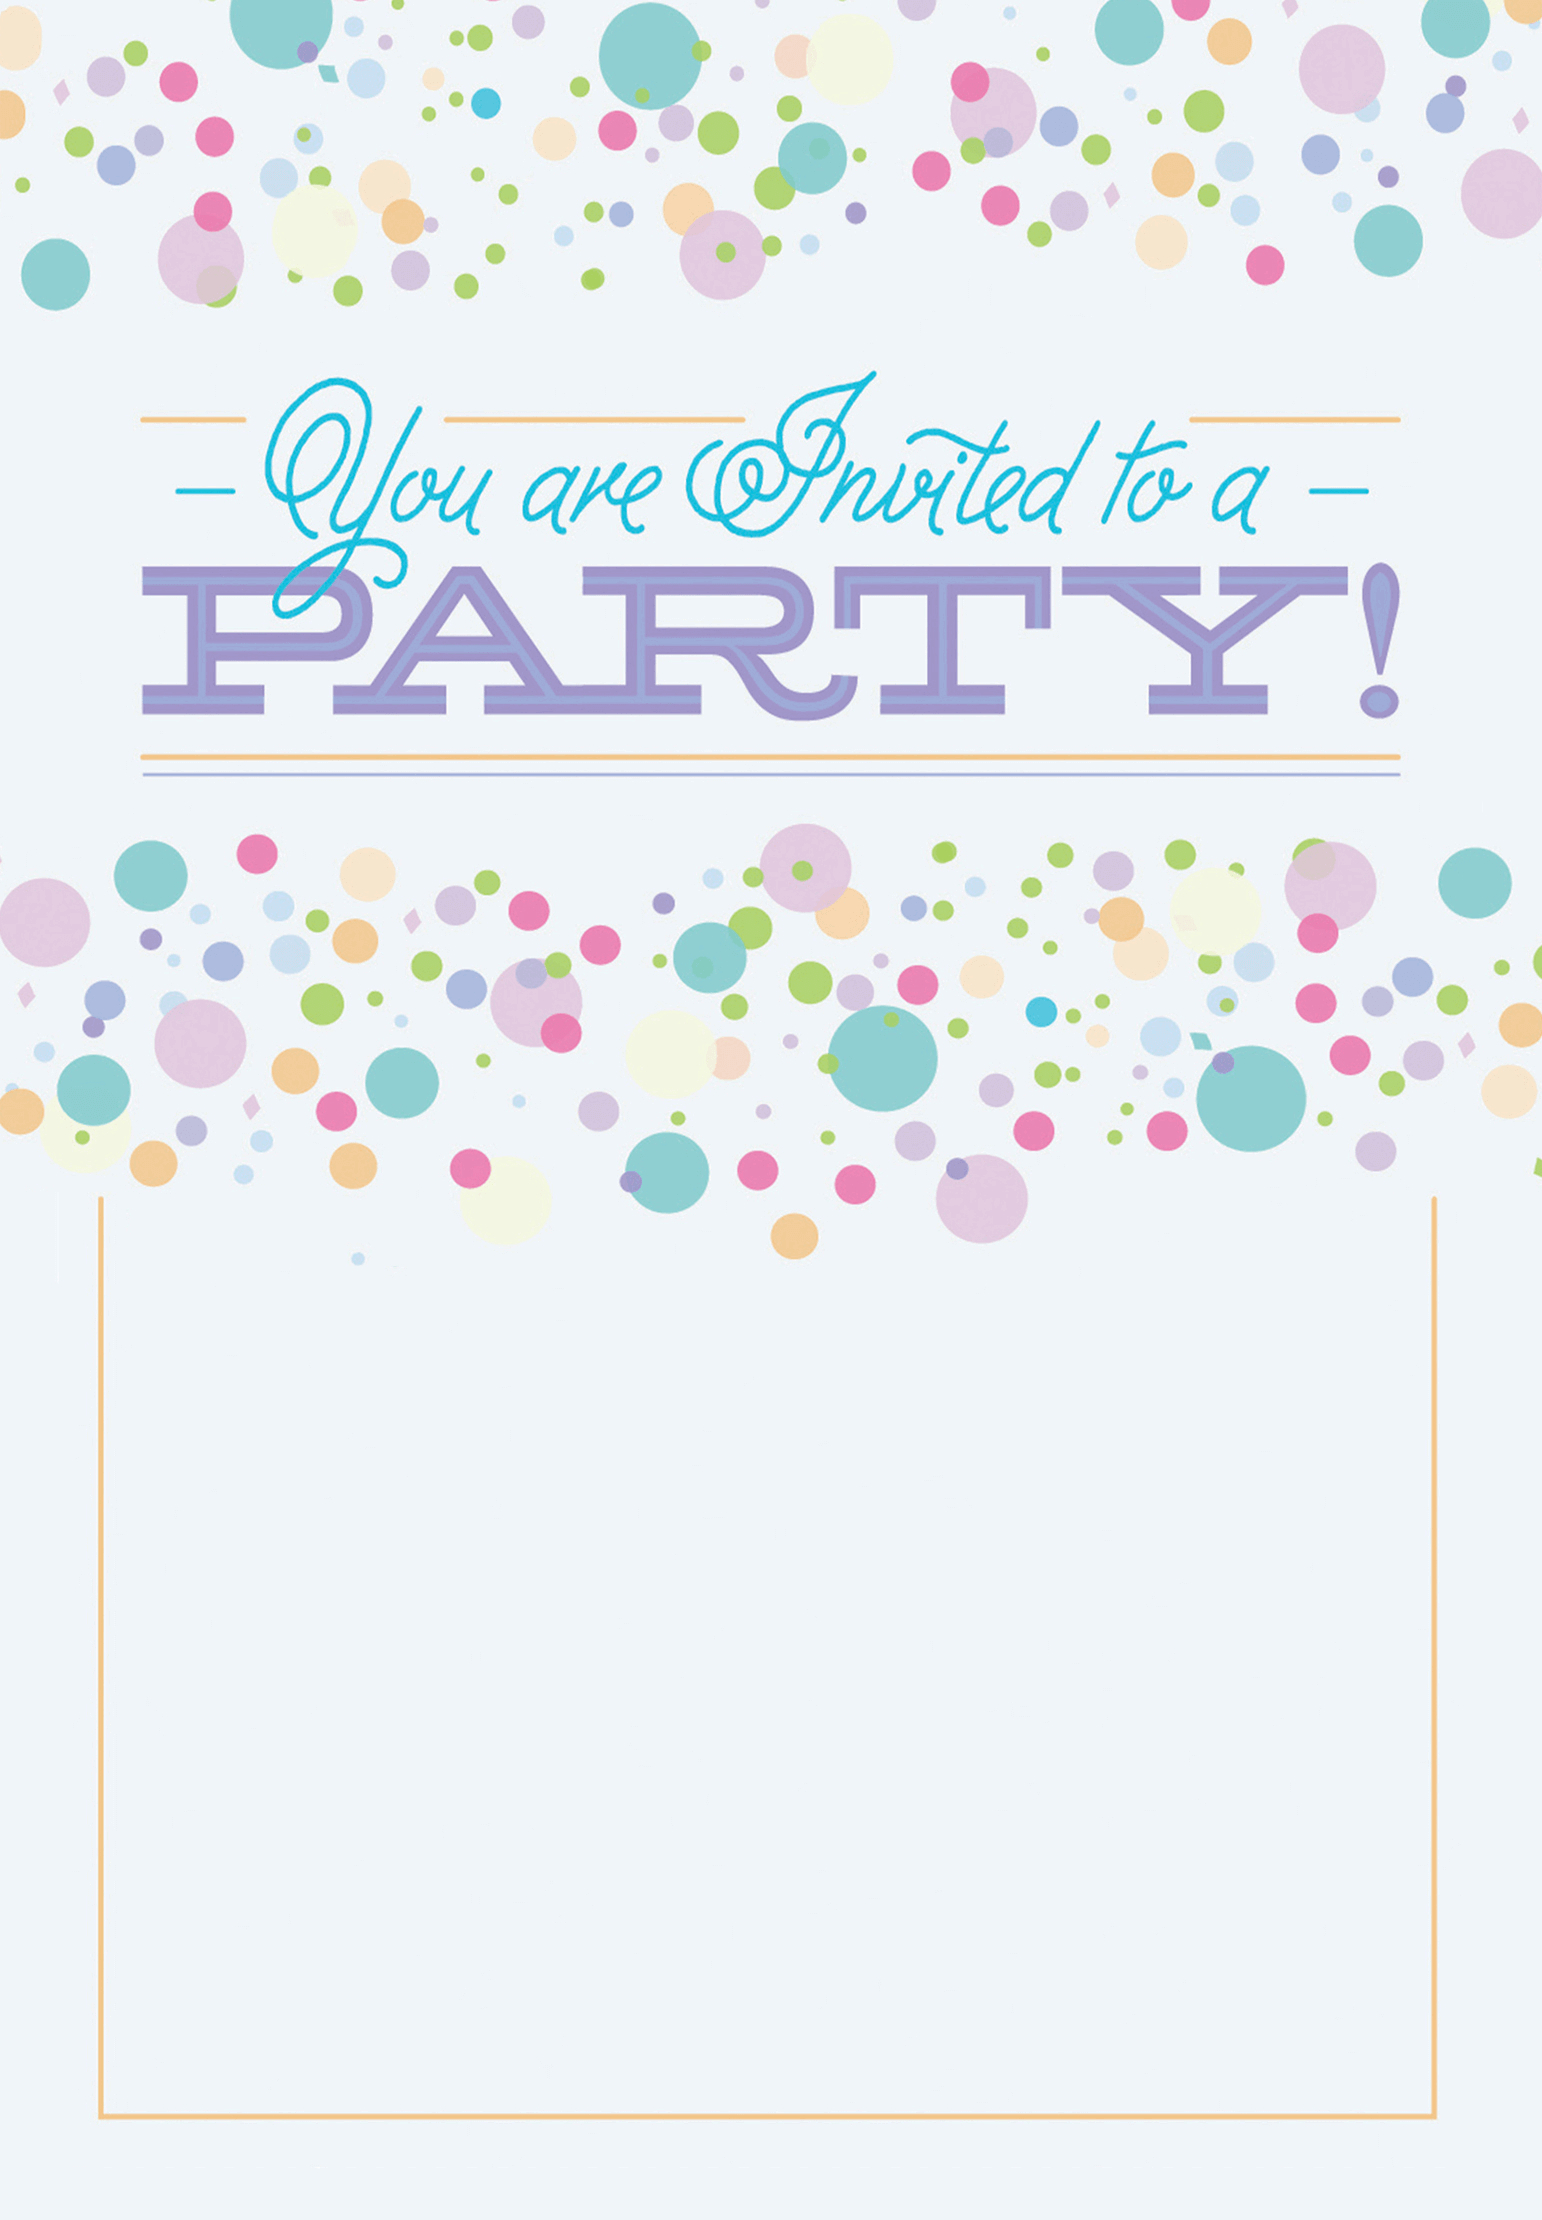 Polka Dots - Free Printable Party Invitation Template | Greetings - Free Printable Polka Dot Birthday Party Invitations